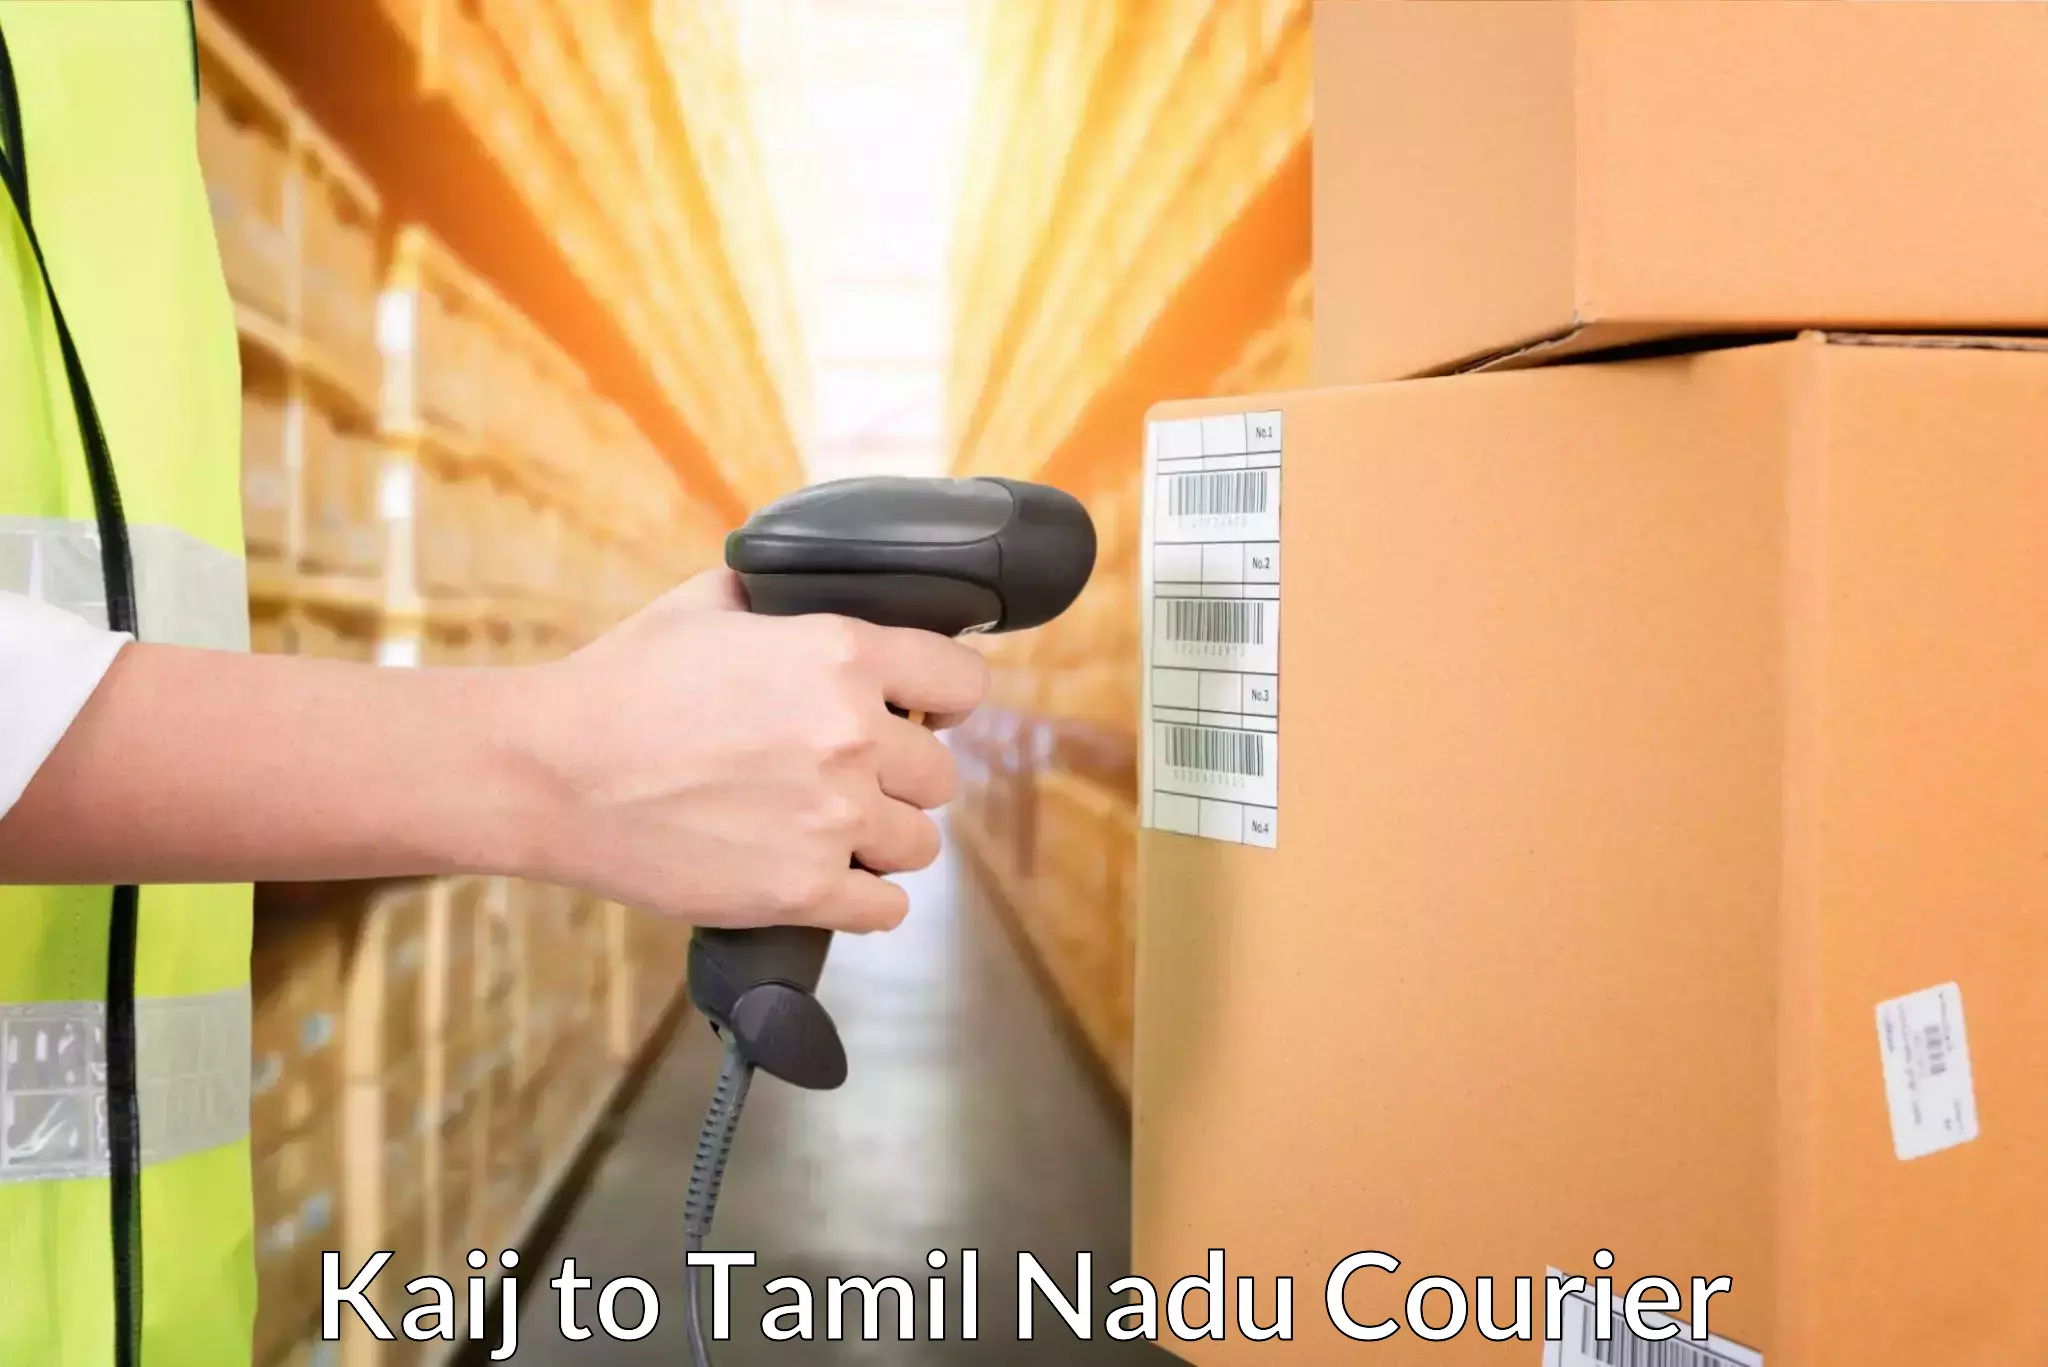 Global shipping solutions Kaij to Pattukottai